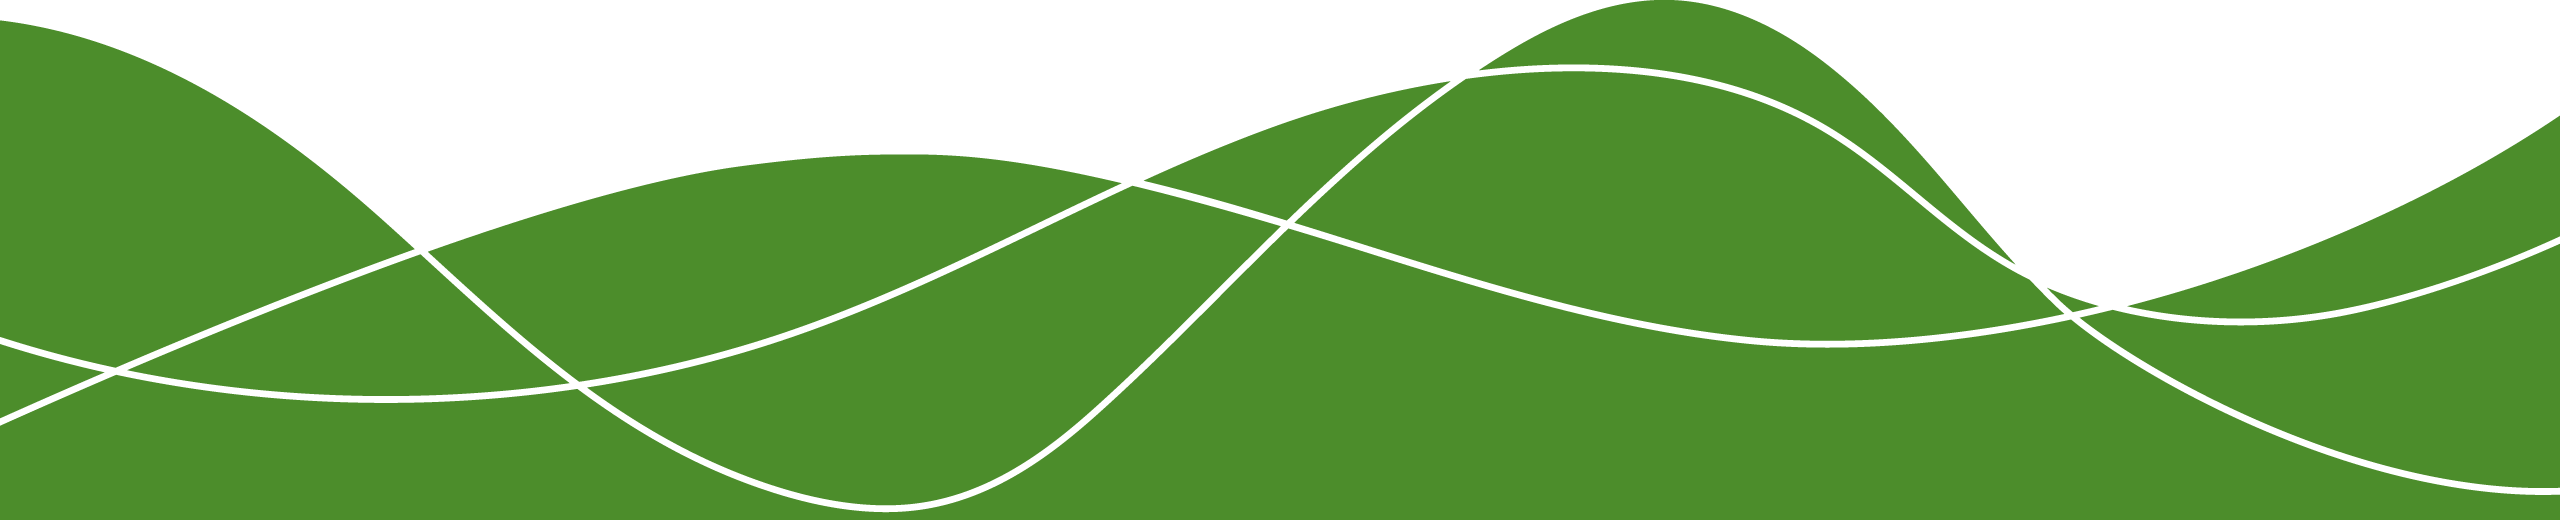 Ovesco Green shapes image